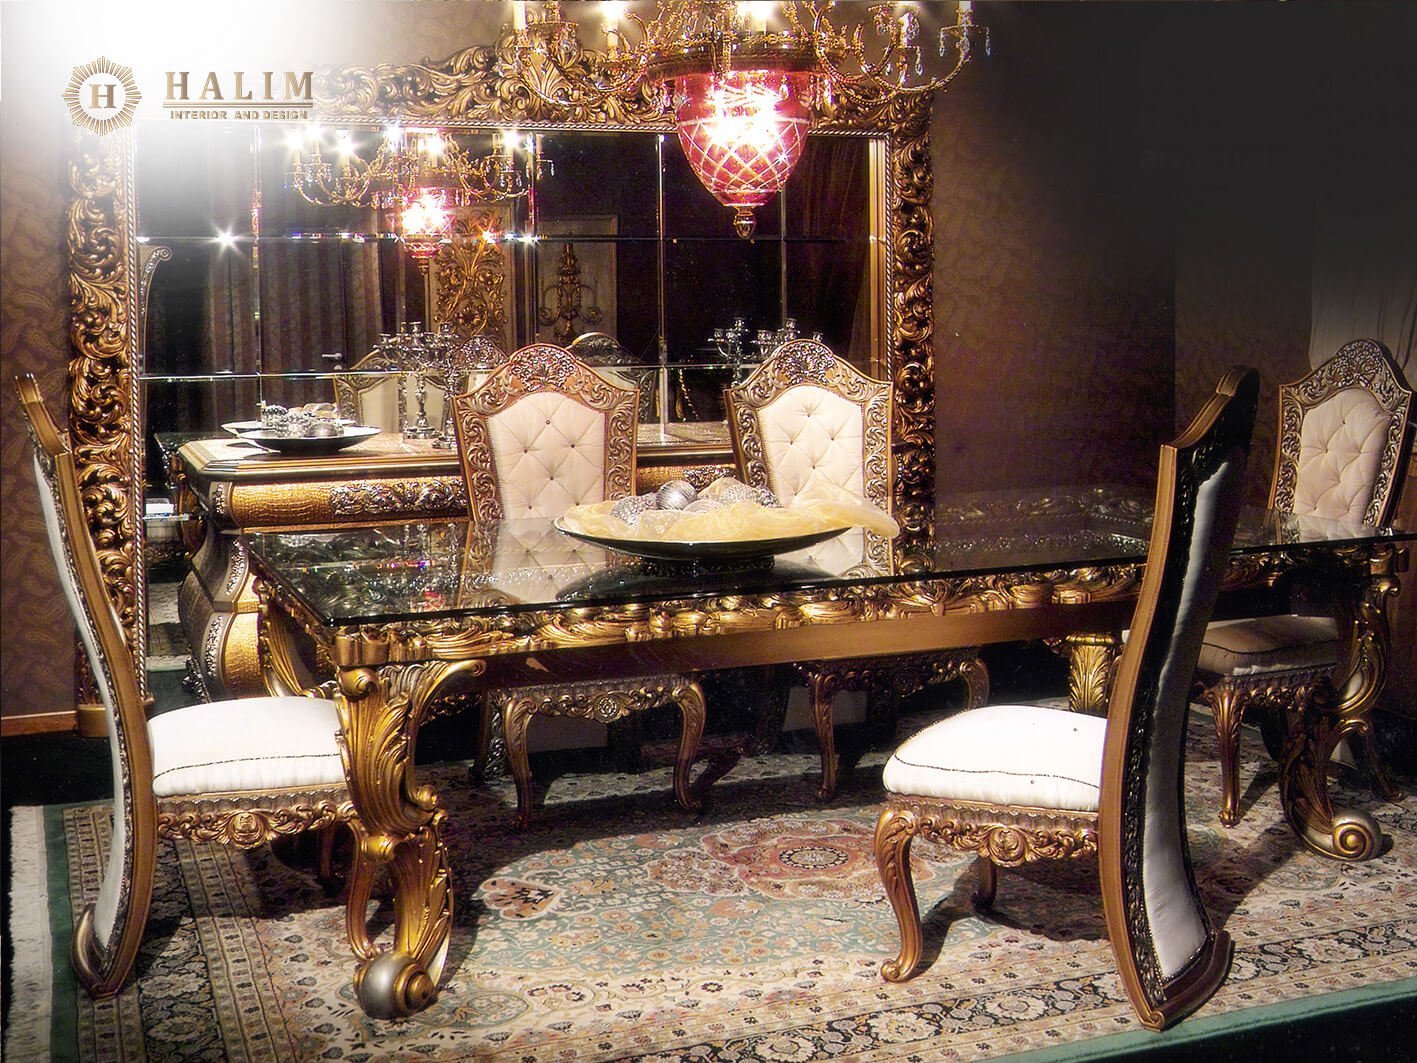 Halim Interior modern furniture contemporer american style minimalist european classic surabaya dining set dt